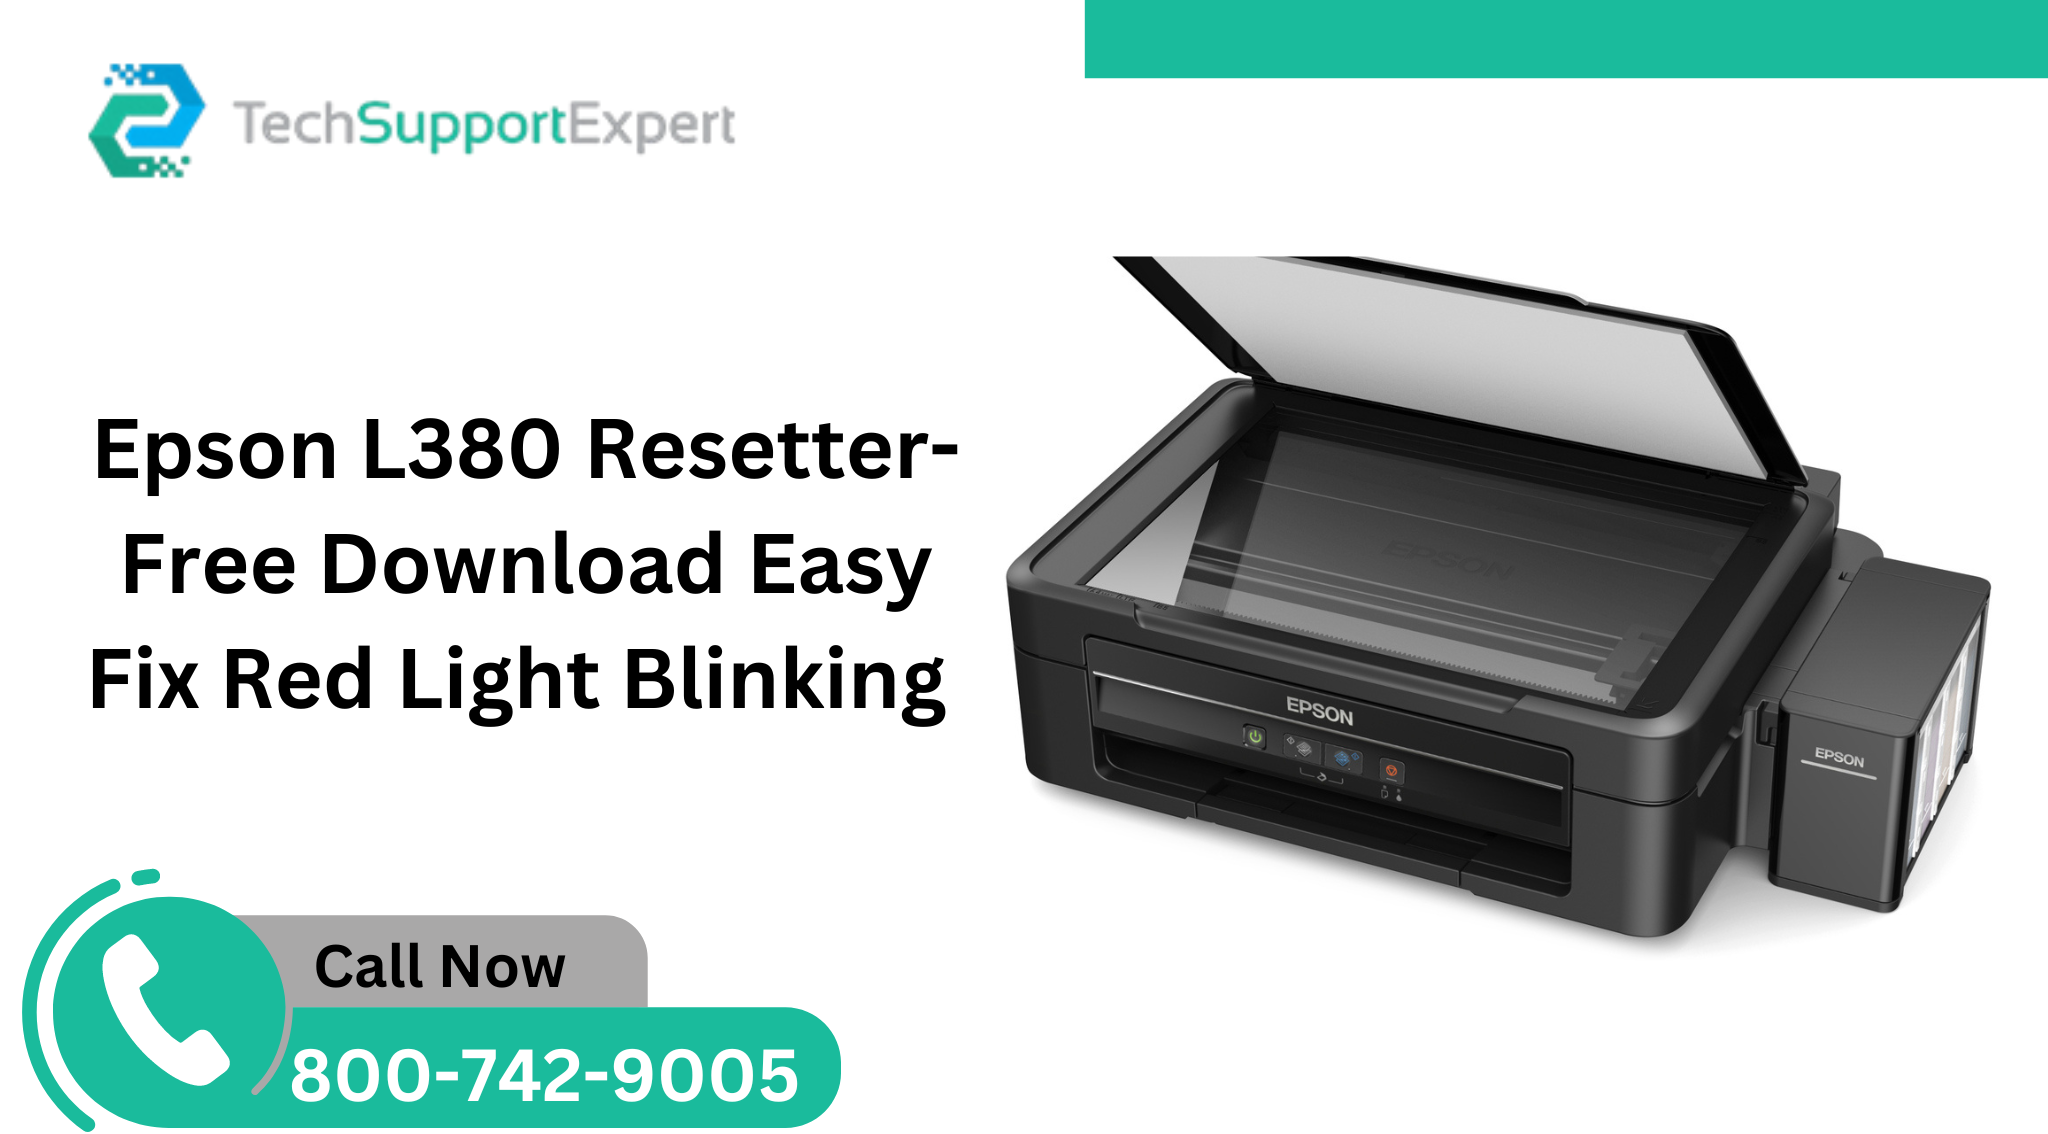 Epson L380 Resetter-Free Download Easy Fix Red Light Blinking